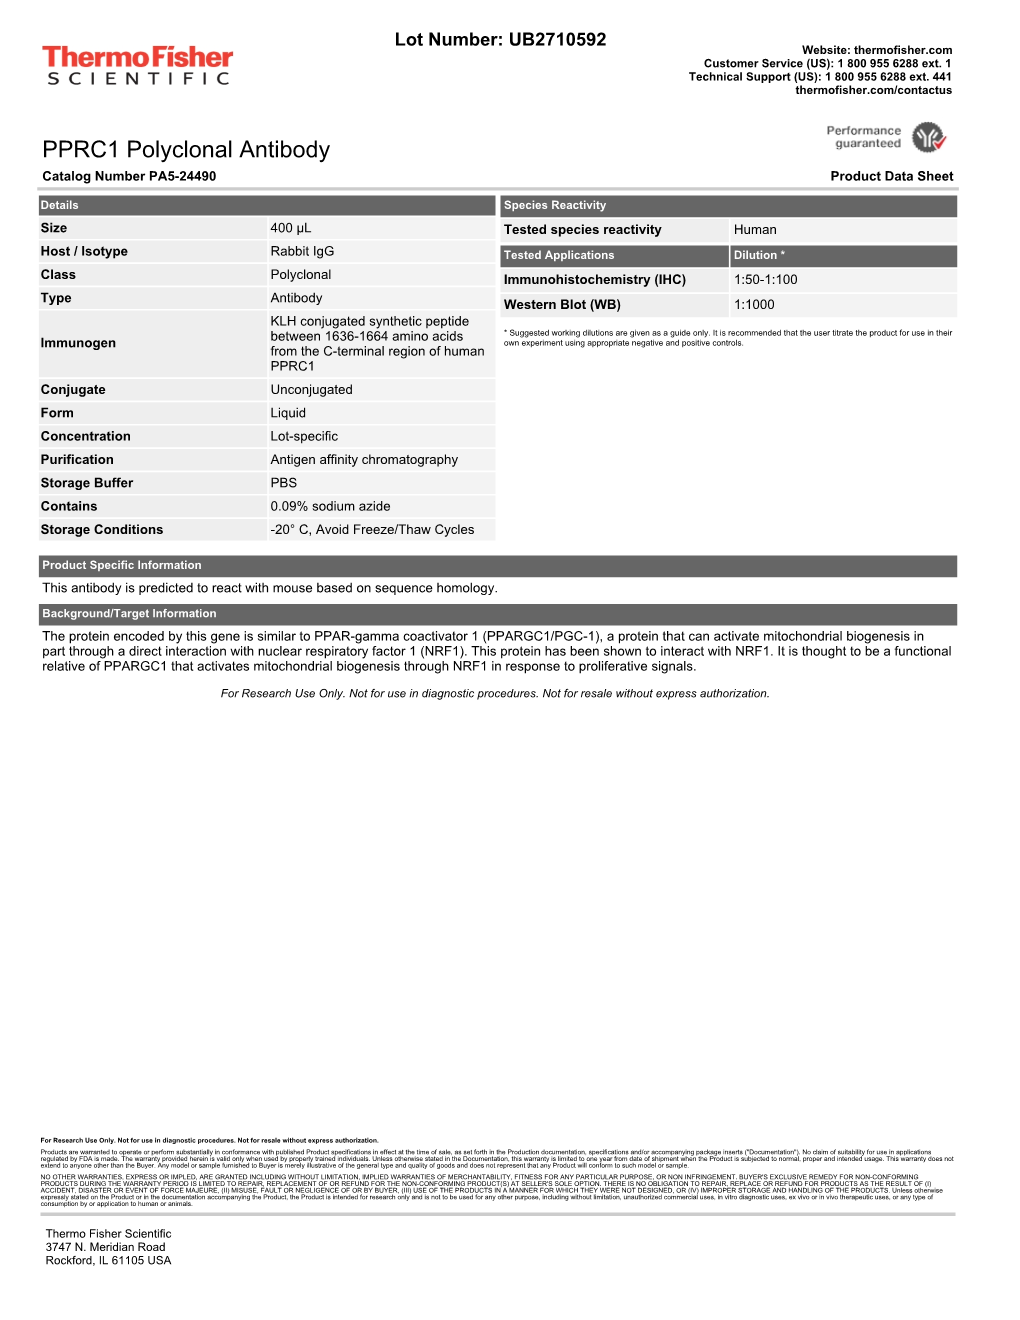 PPRC1 Polyclonal Antibody Catalog Number PA5-24490 Product Data Sheet